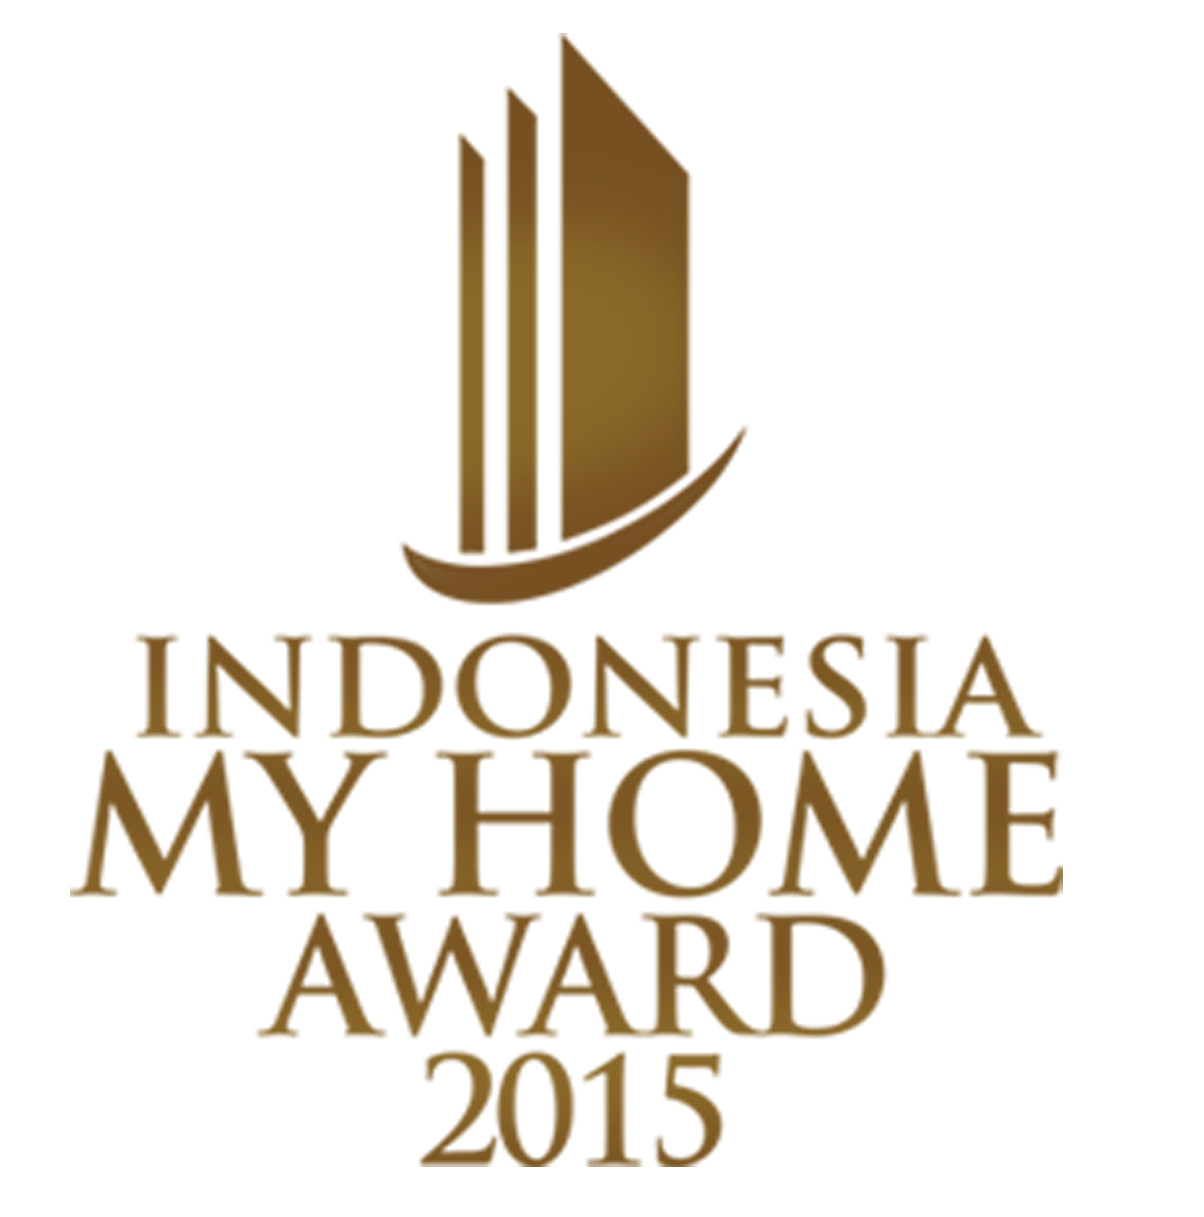 LOGO-indonesia my home award 15.jpg